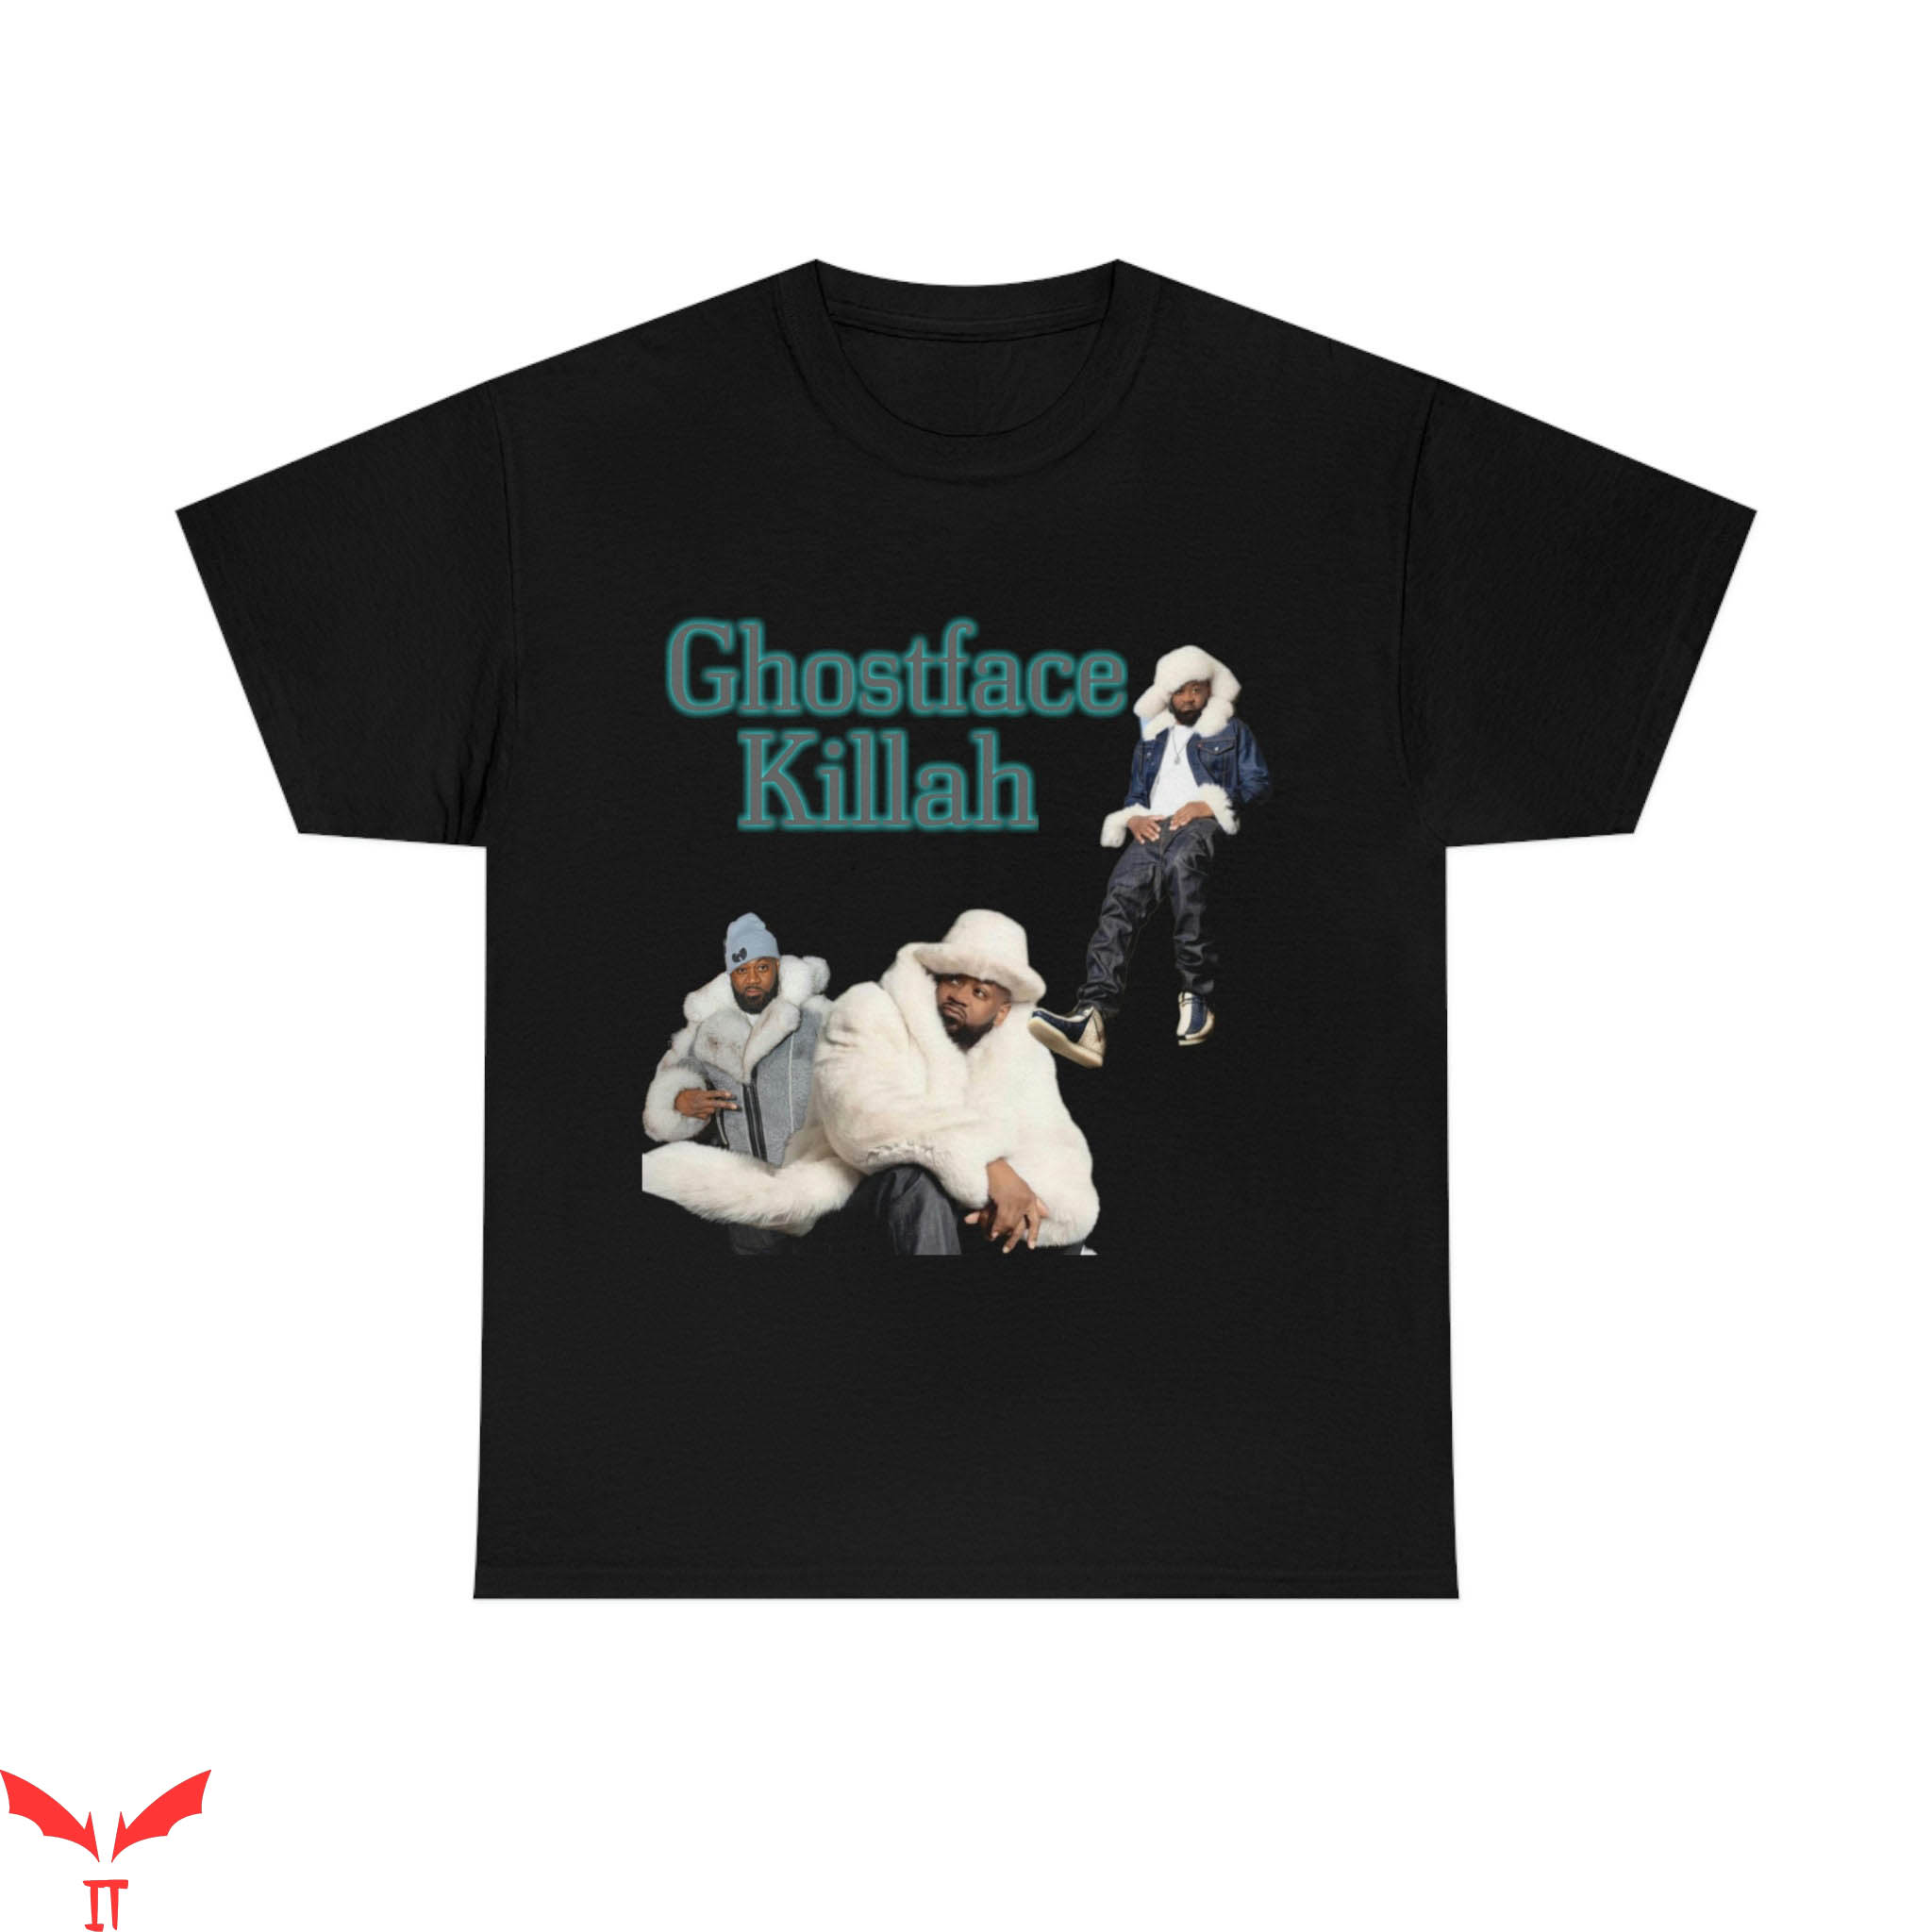 Ghostface Killah T-Shirt Famous American Rapper Tee